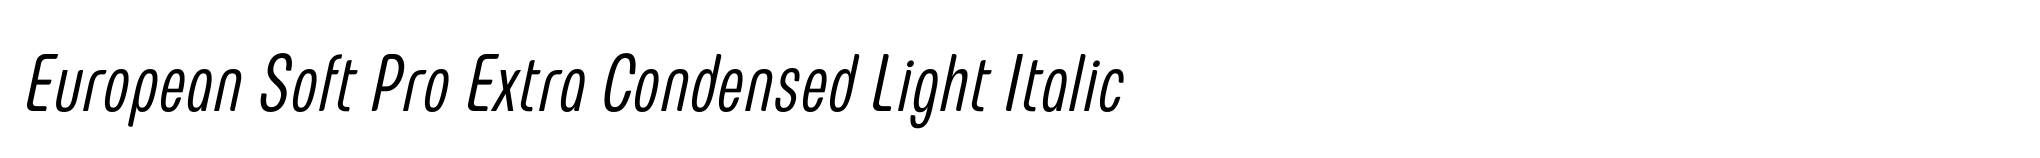 European Soft Pro Extra Condensed Light Italic image